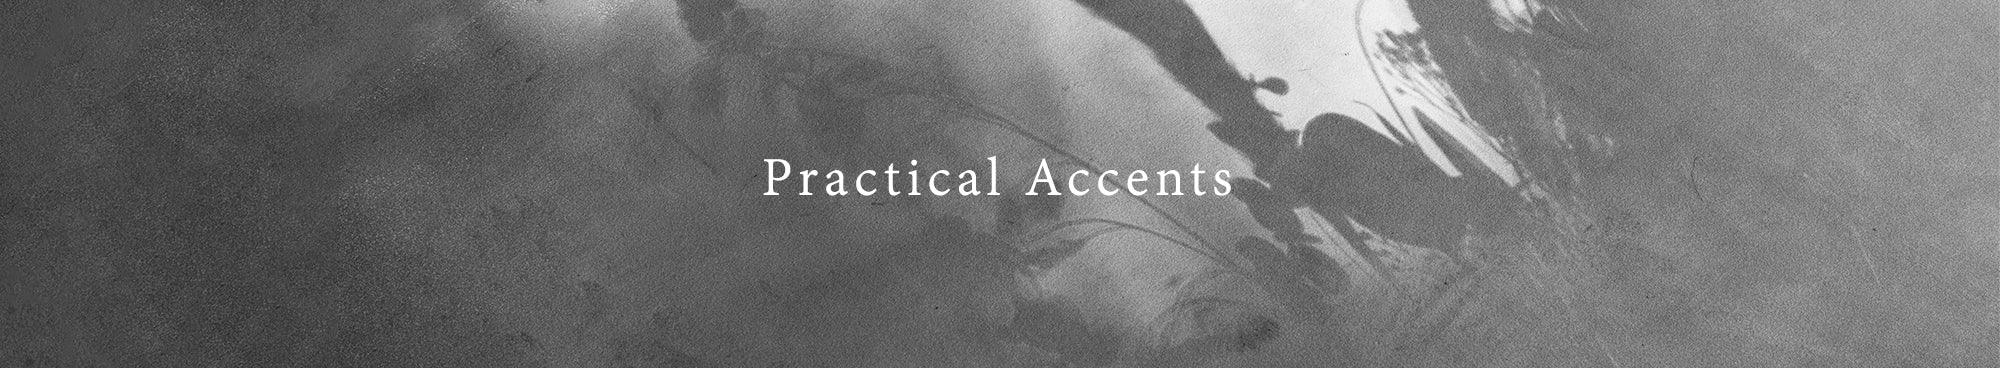 Practical Accents